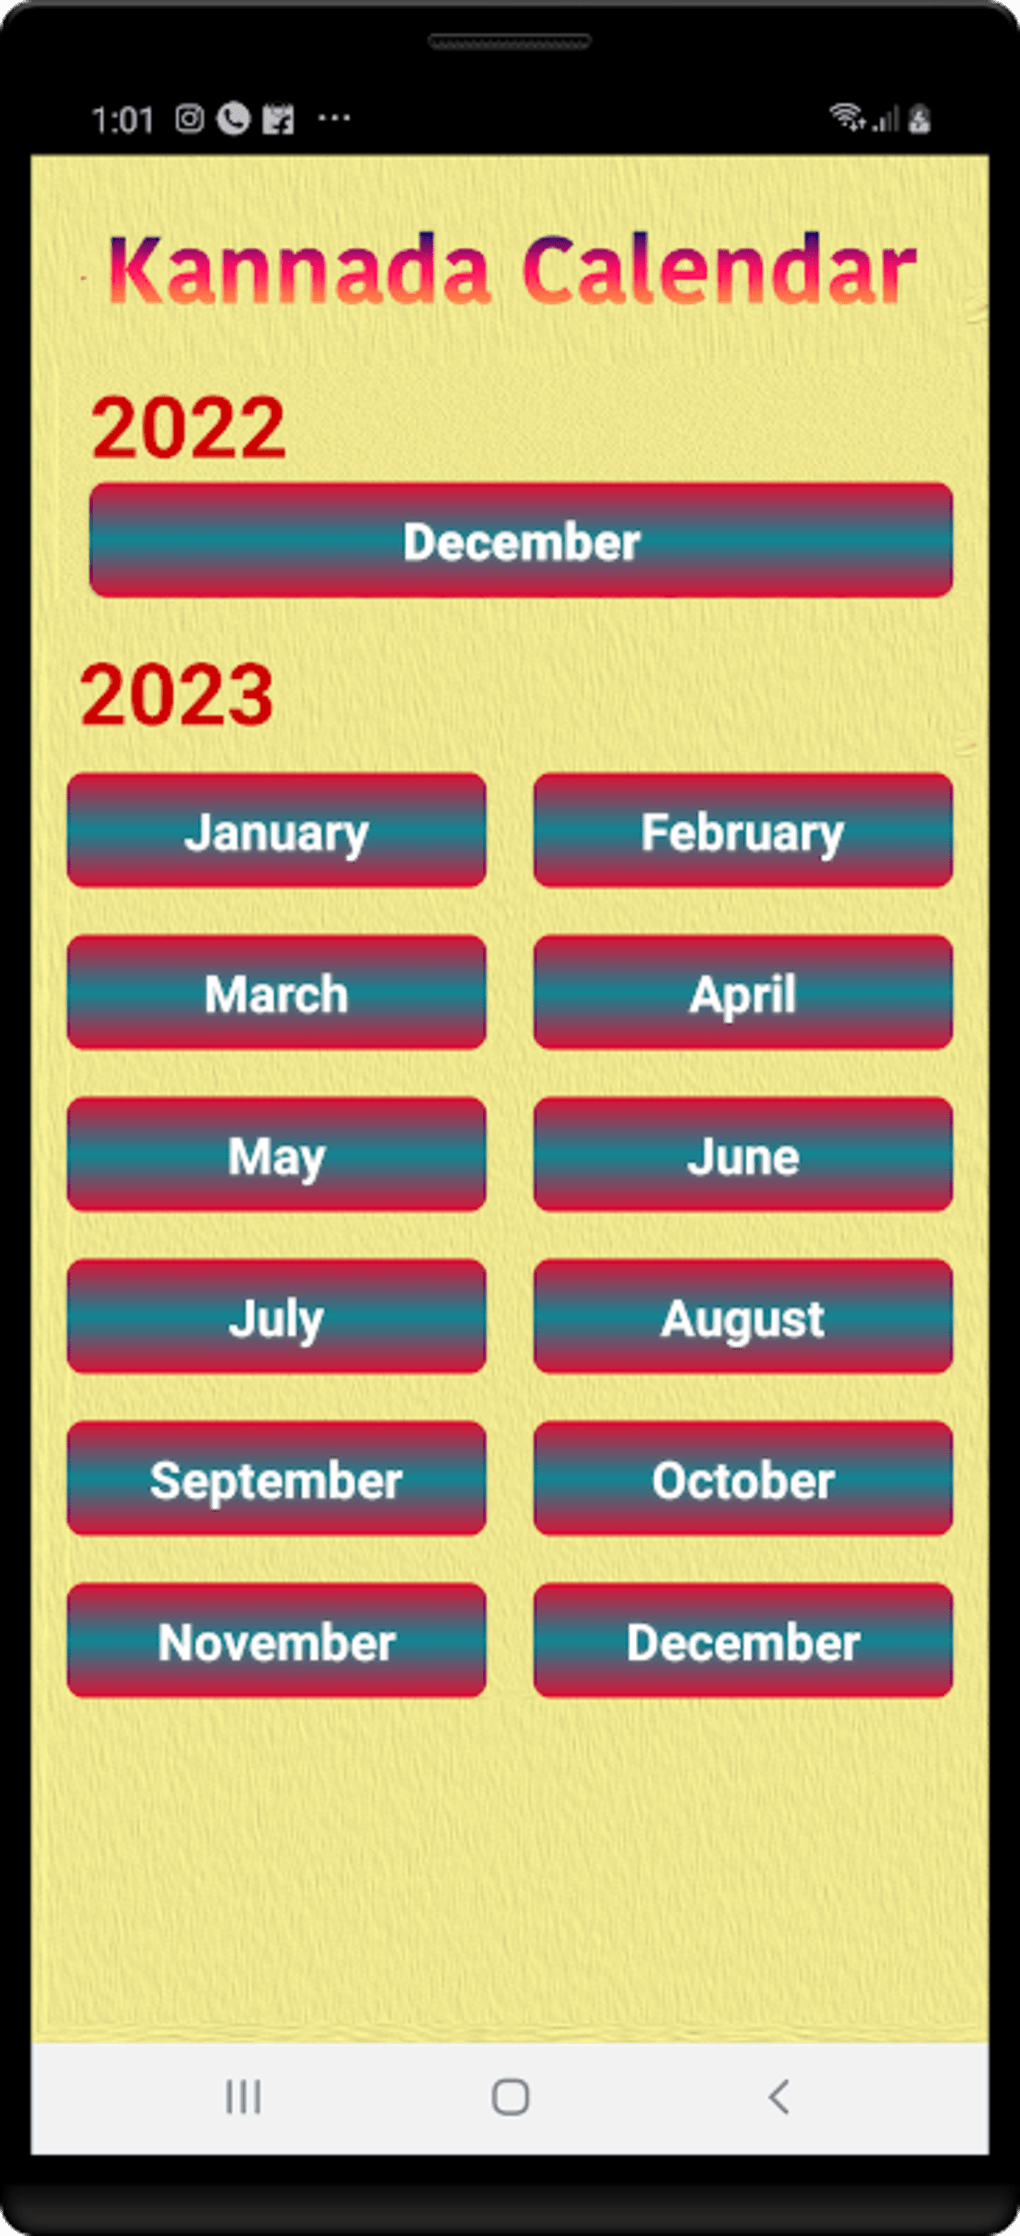 kannada-calendar-2022-2022